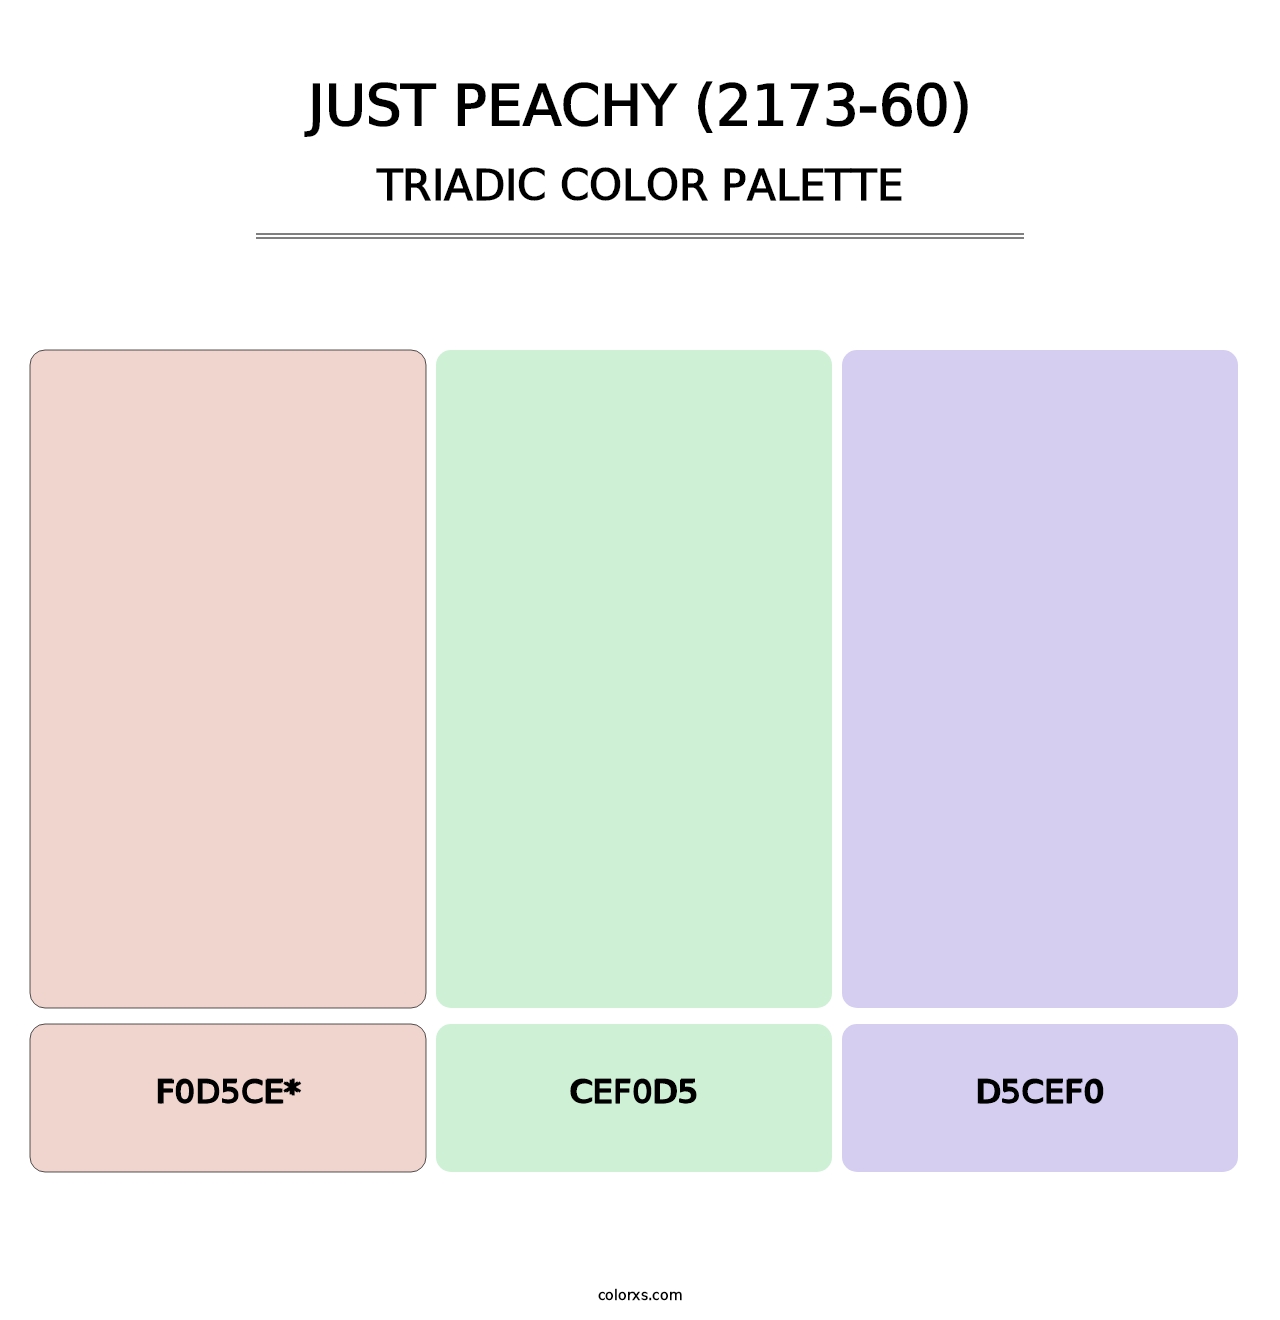 Just Peachy (2173-60) - Triadic Color Palette